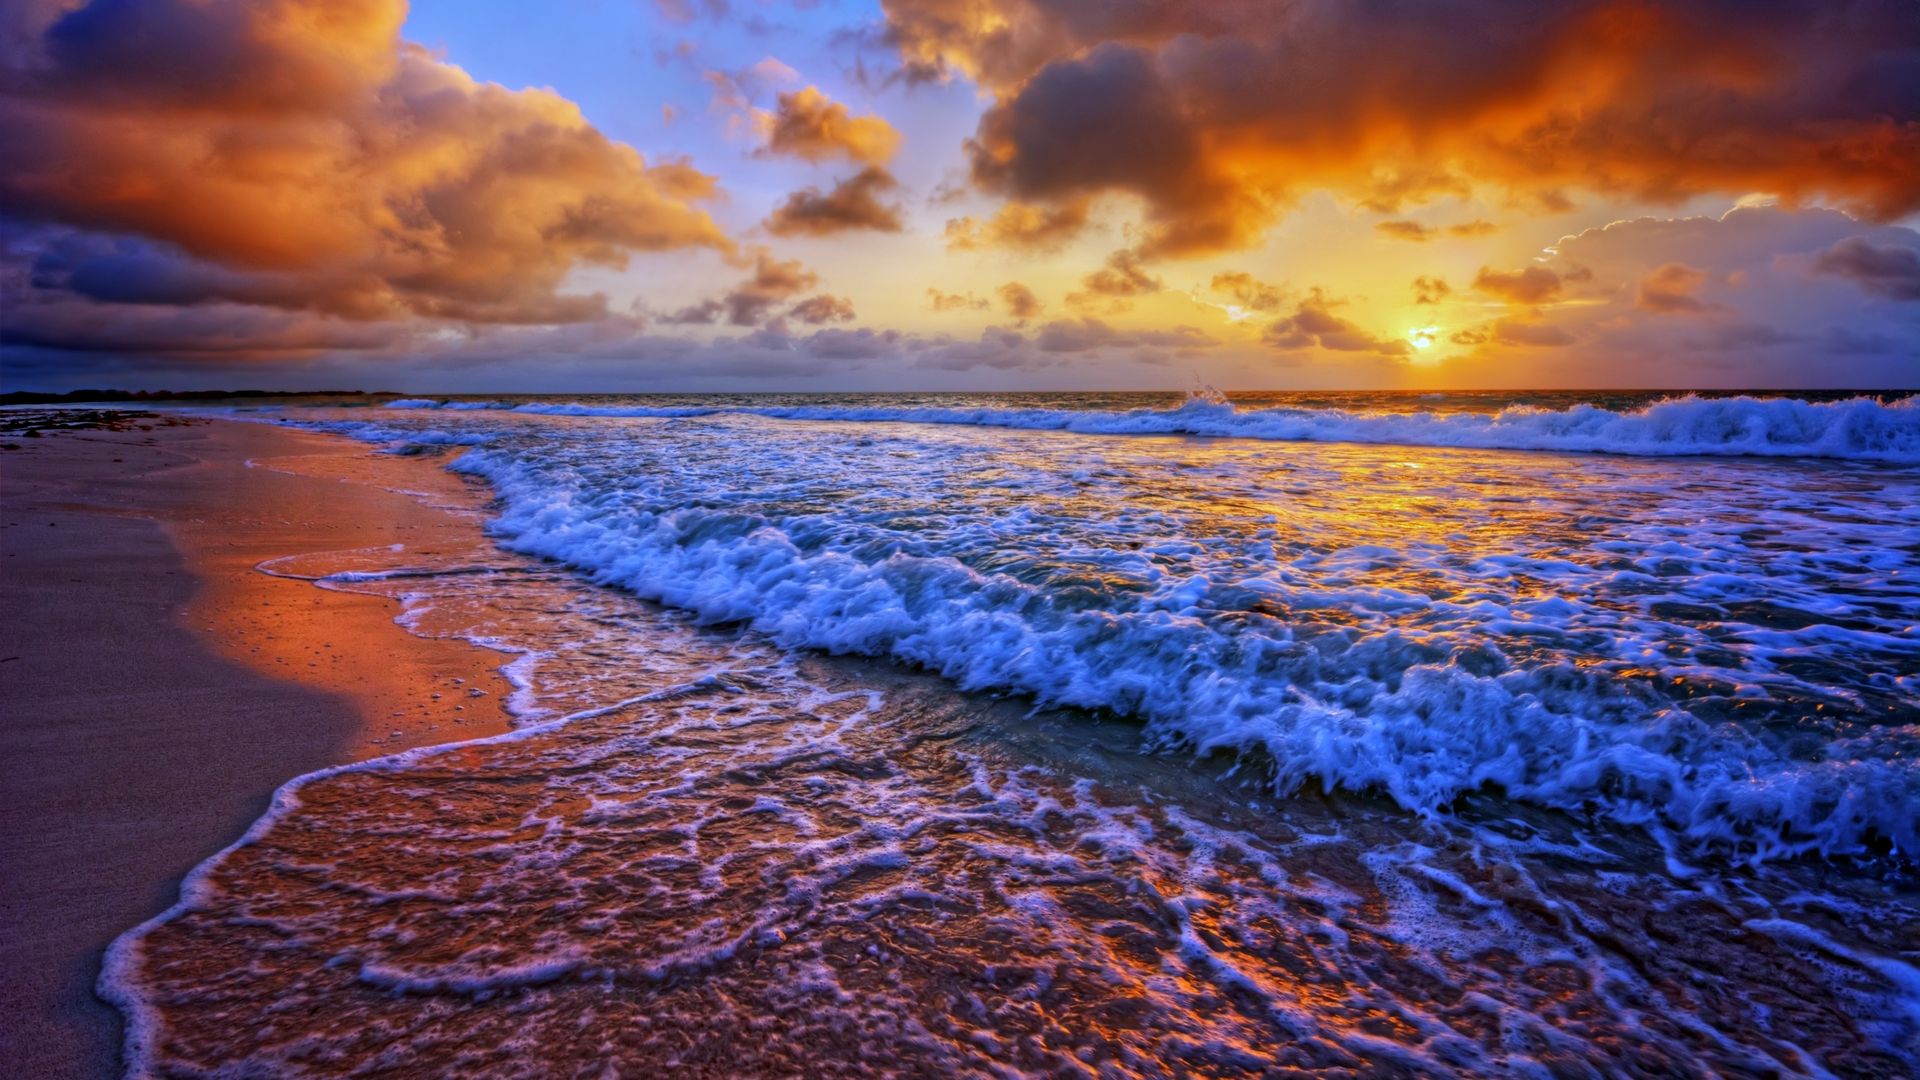 Free Download Beach Sunset Wallpaper 1080p Flip Wallpapers Download